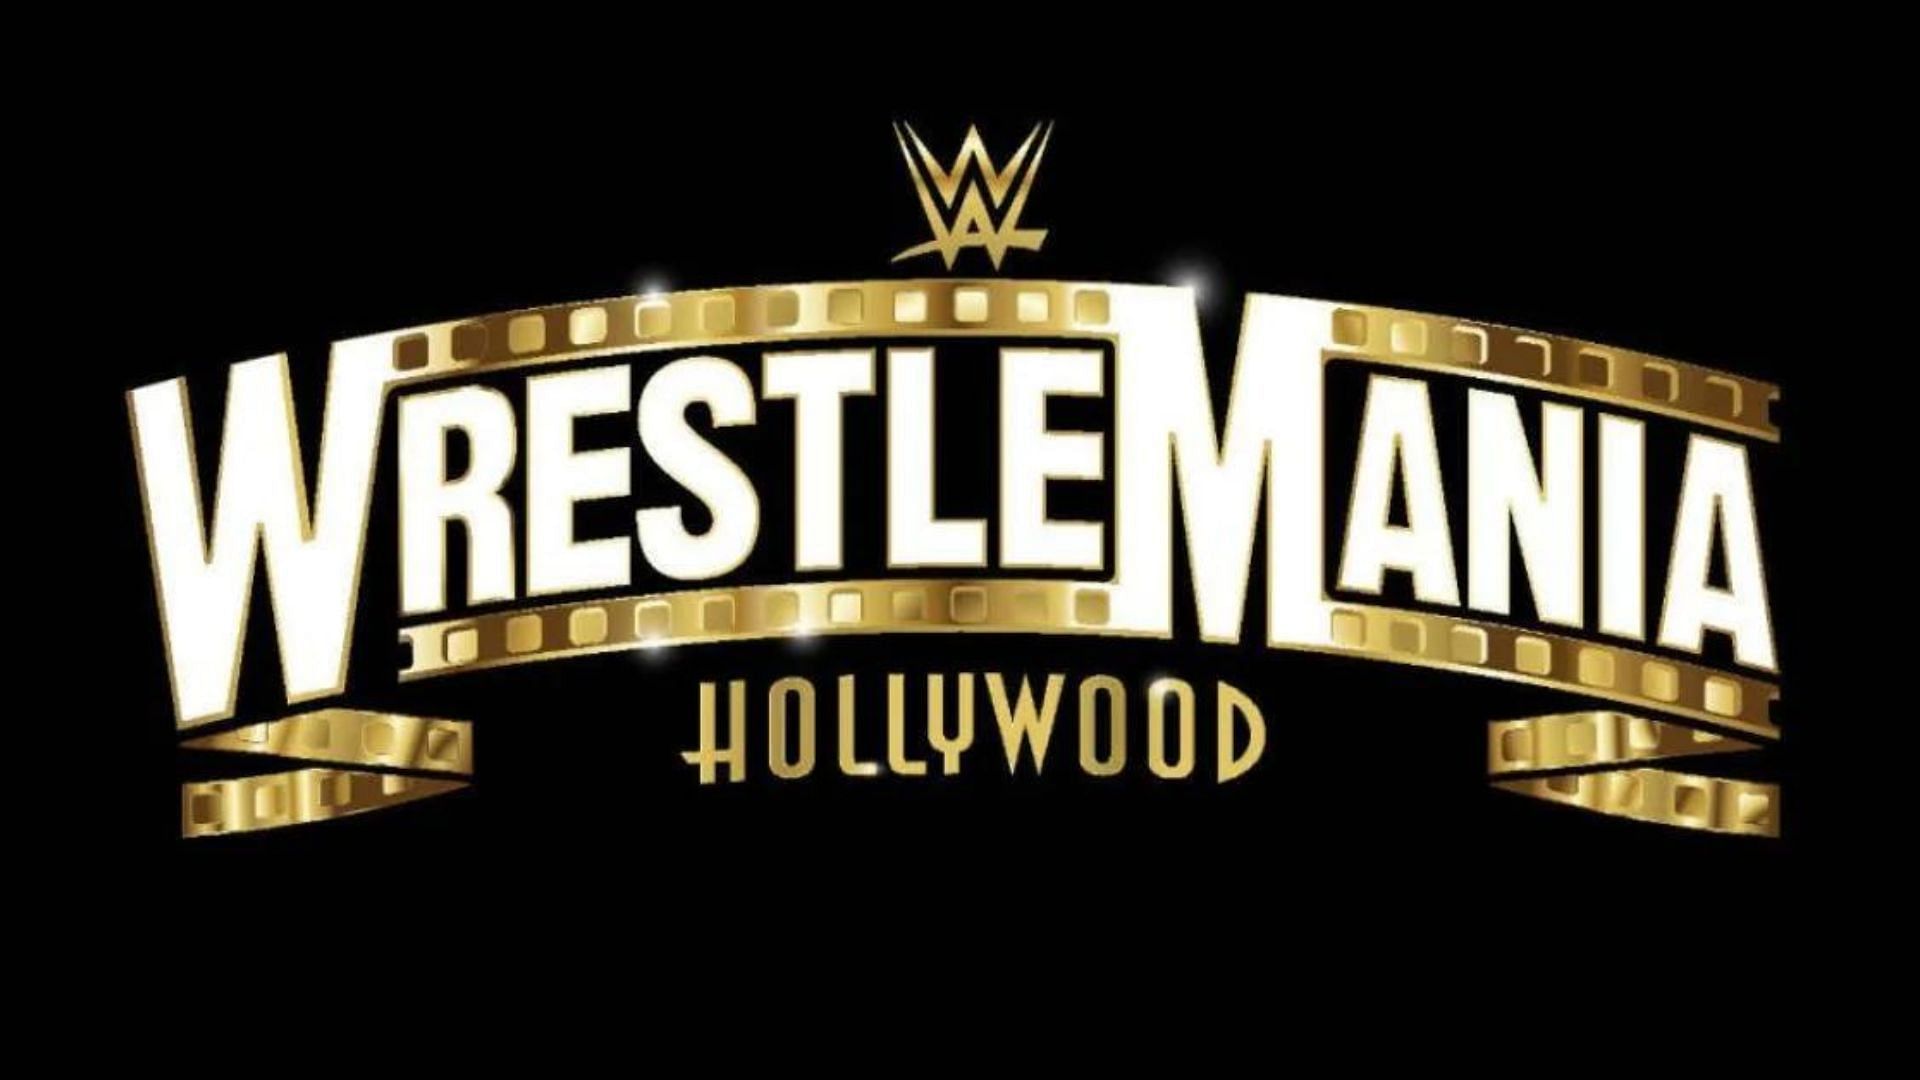 Former AEW star announced during WrestleMania 39 weekend